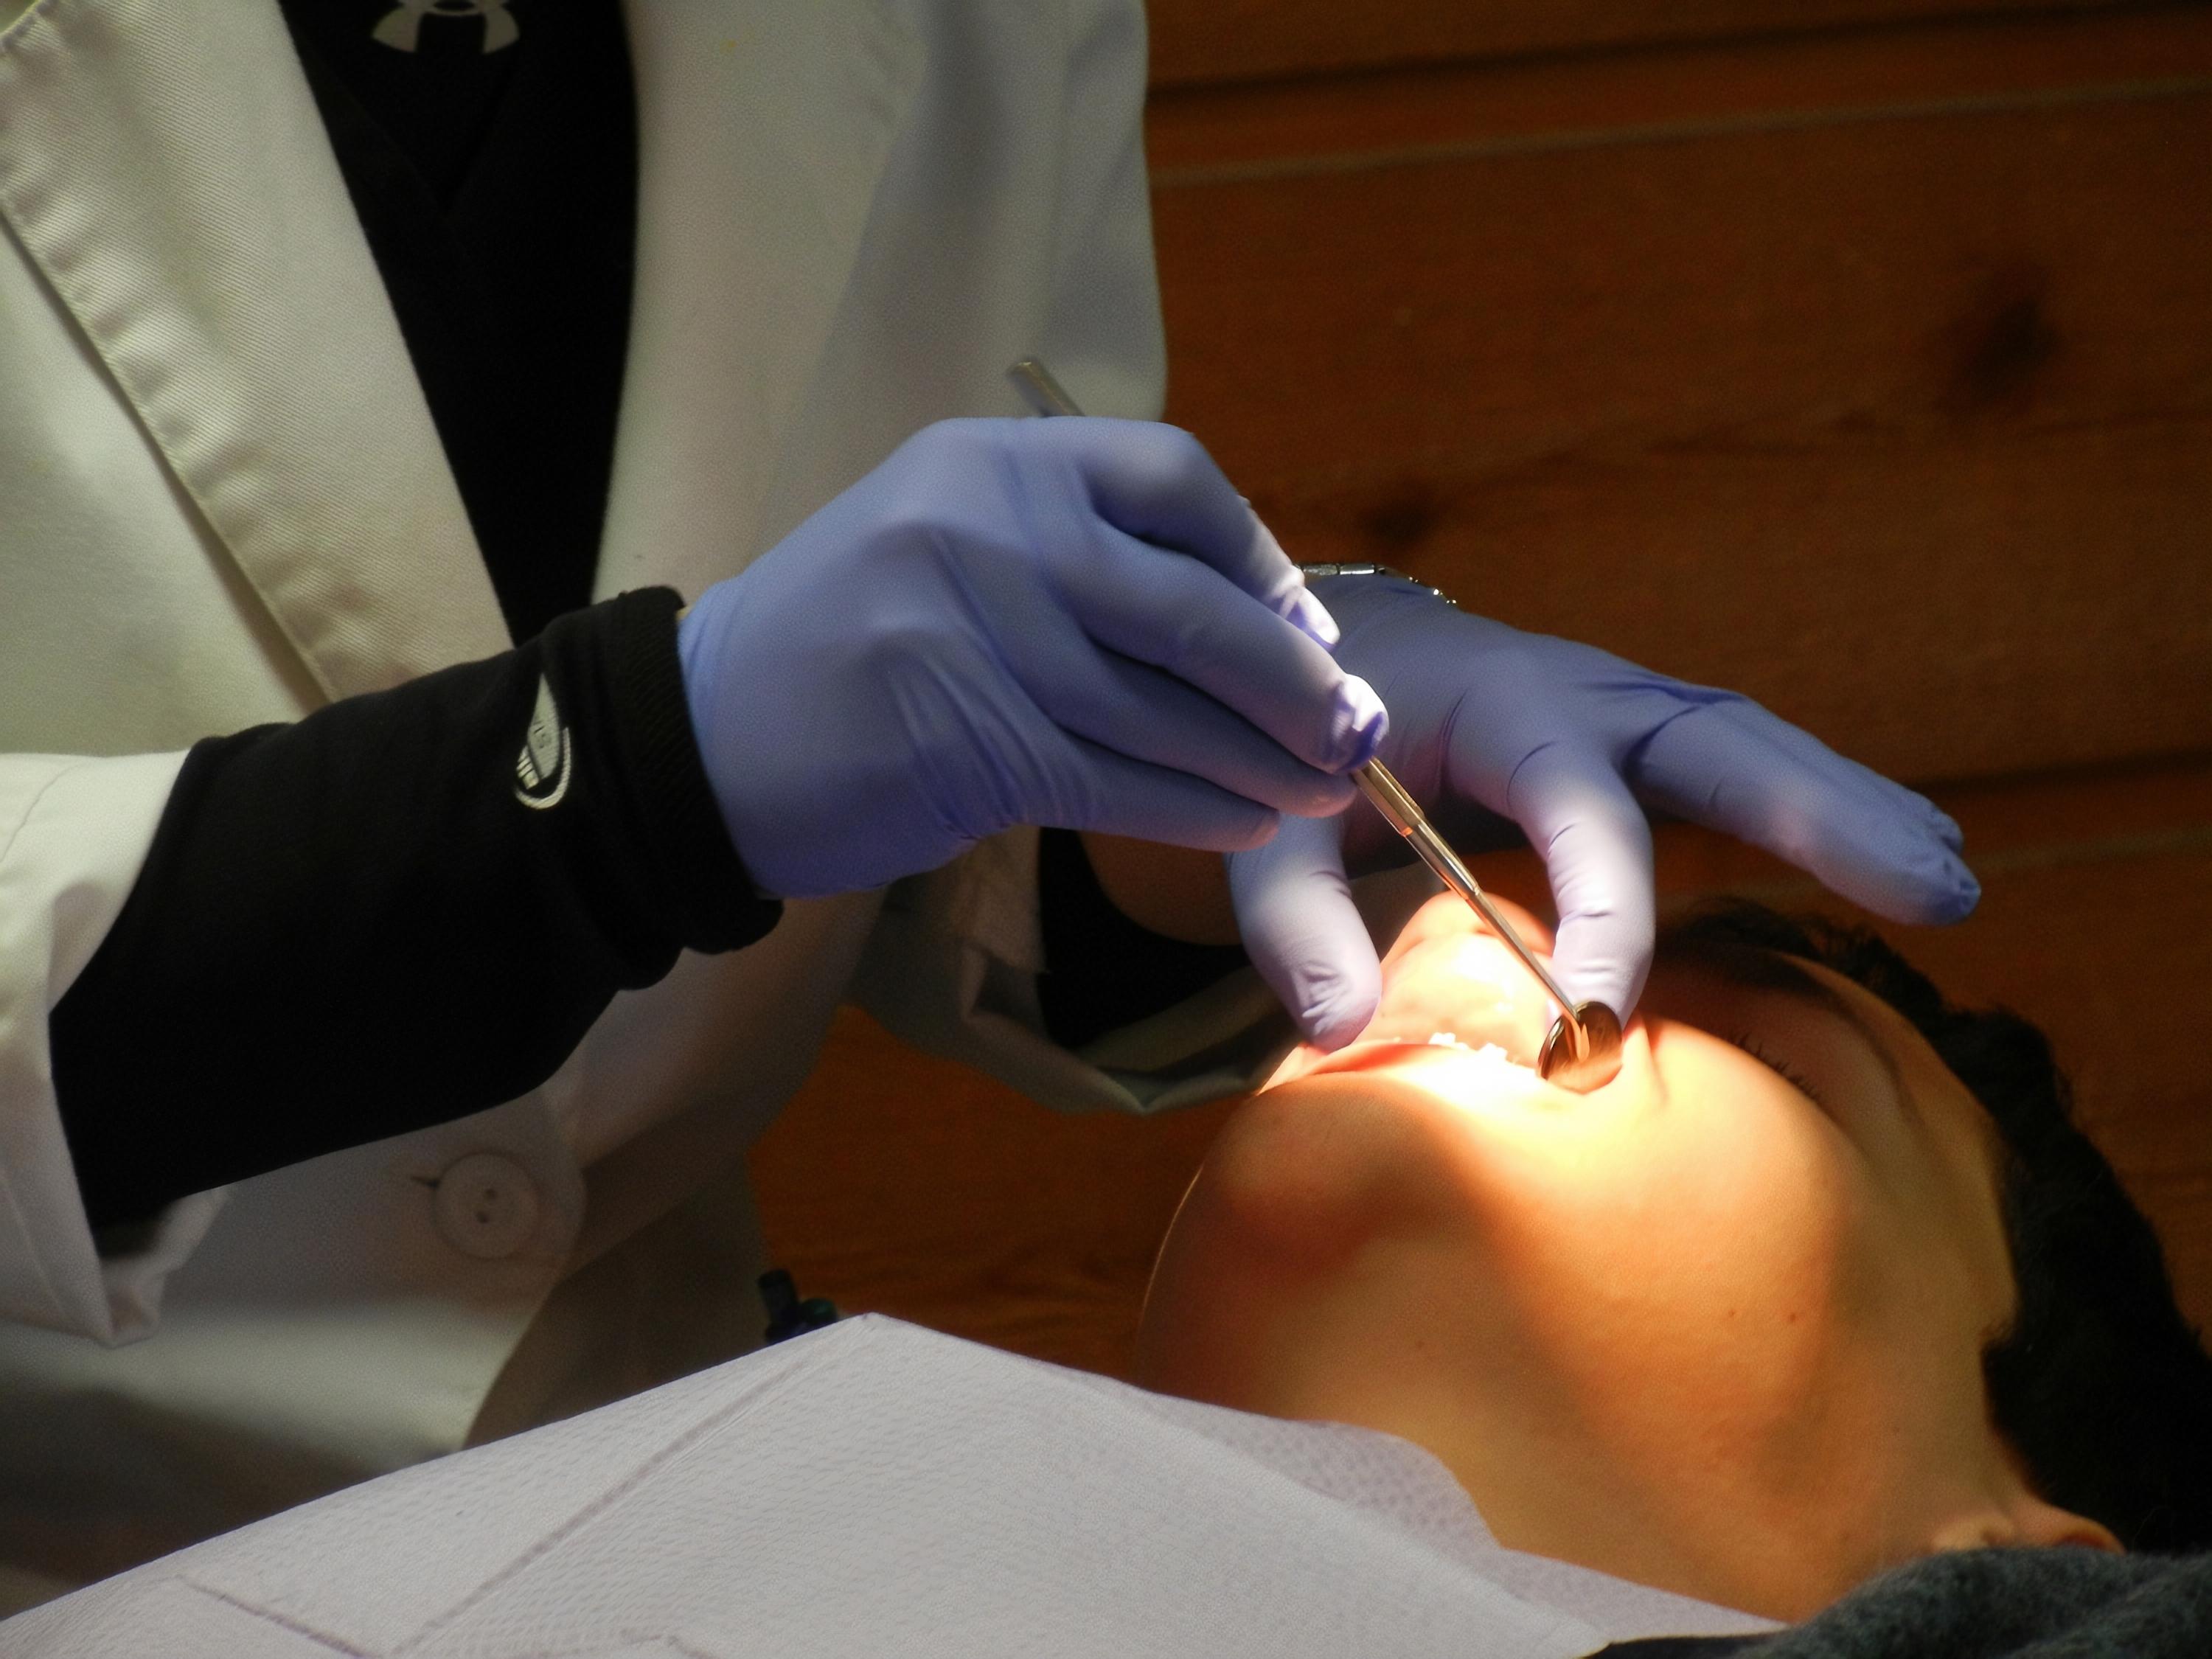 dentist in ukraine works with foreign 